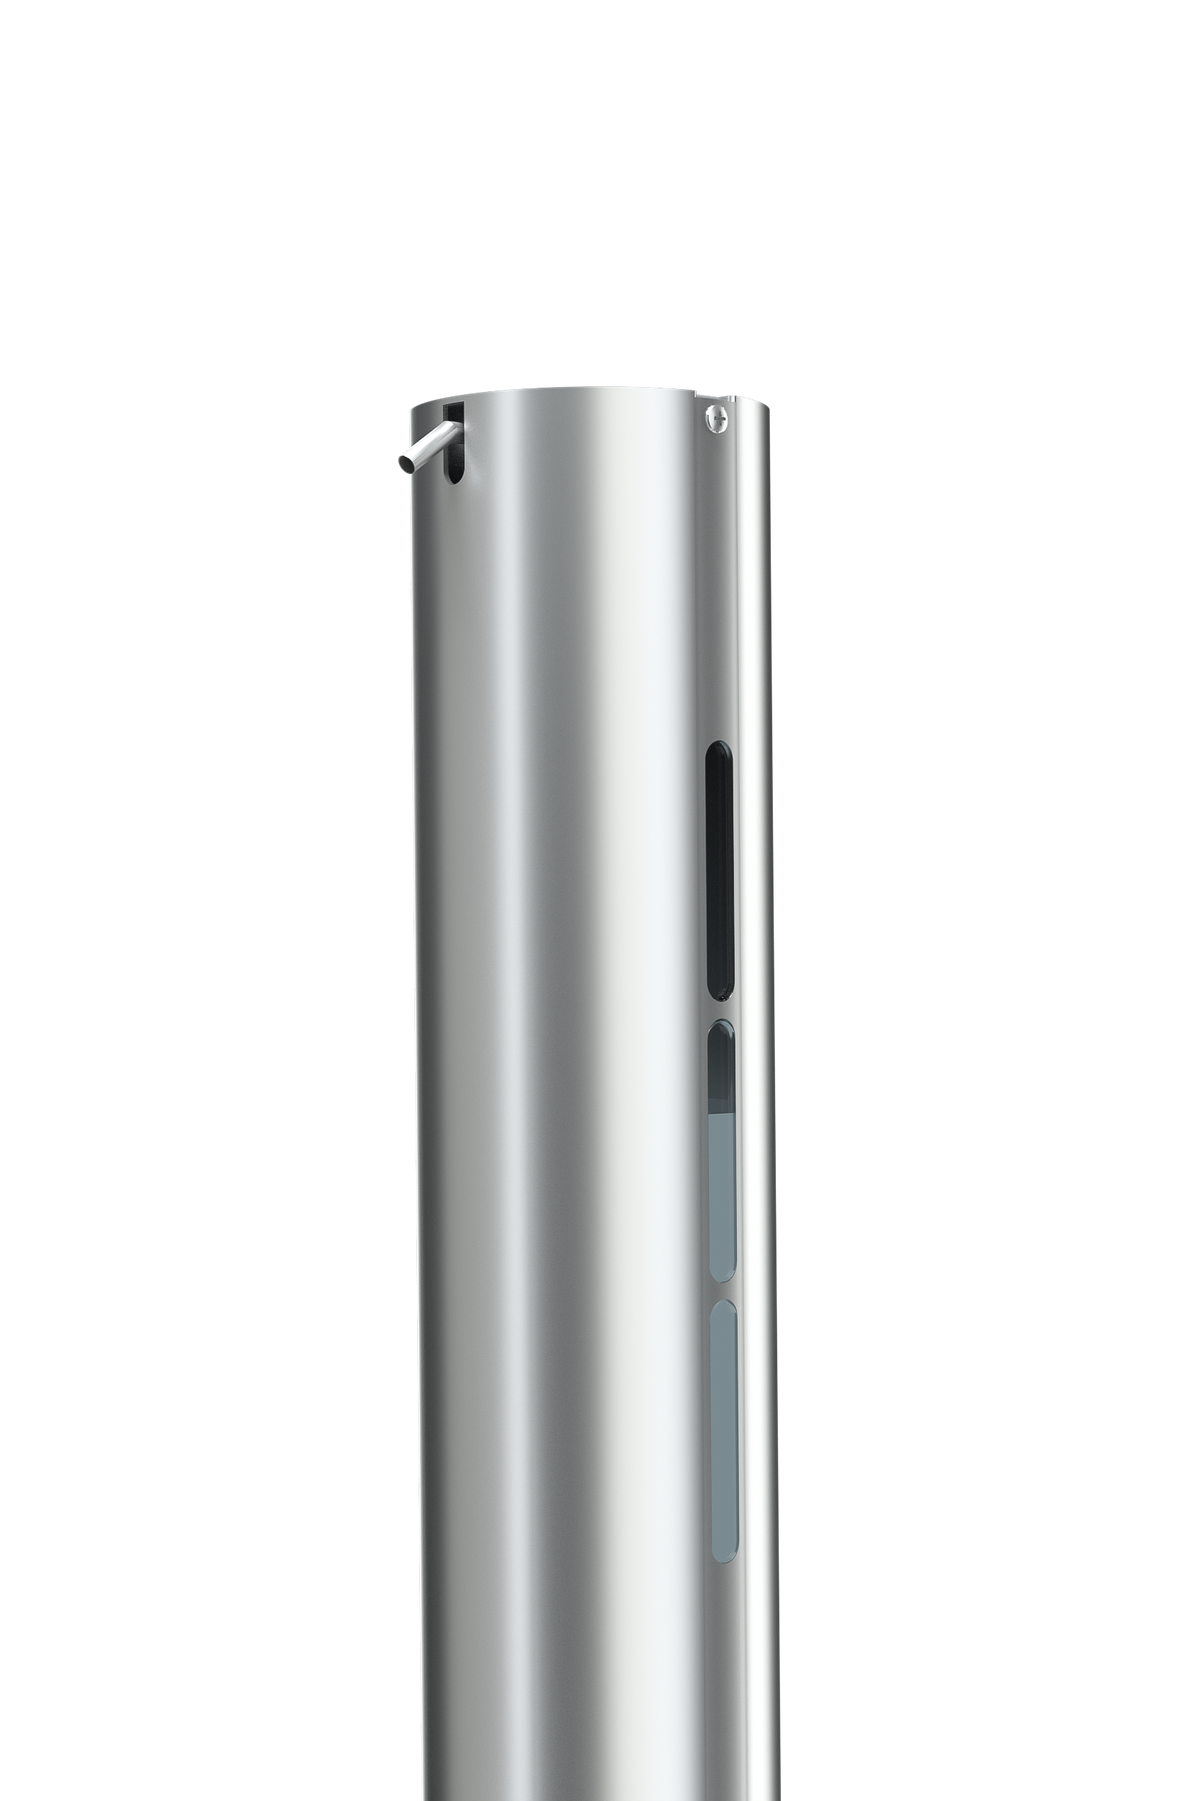 The Luxe® Floor Mounted Sanitizer Dispenser